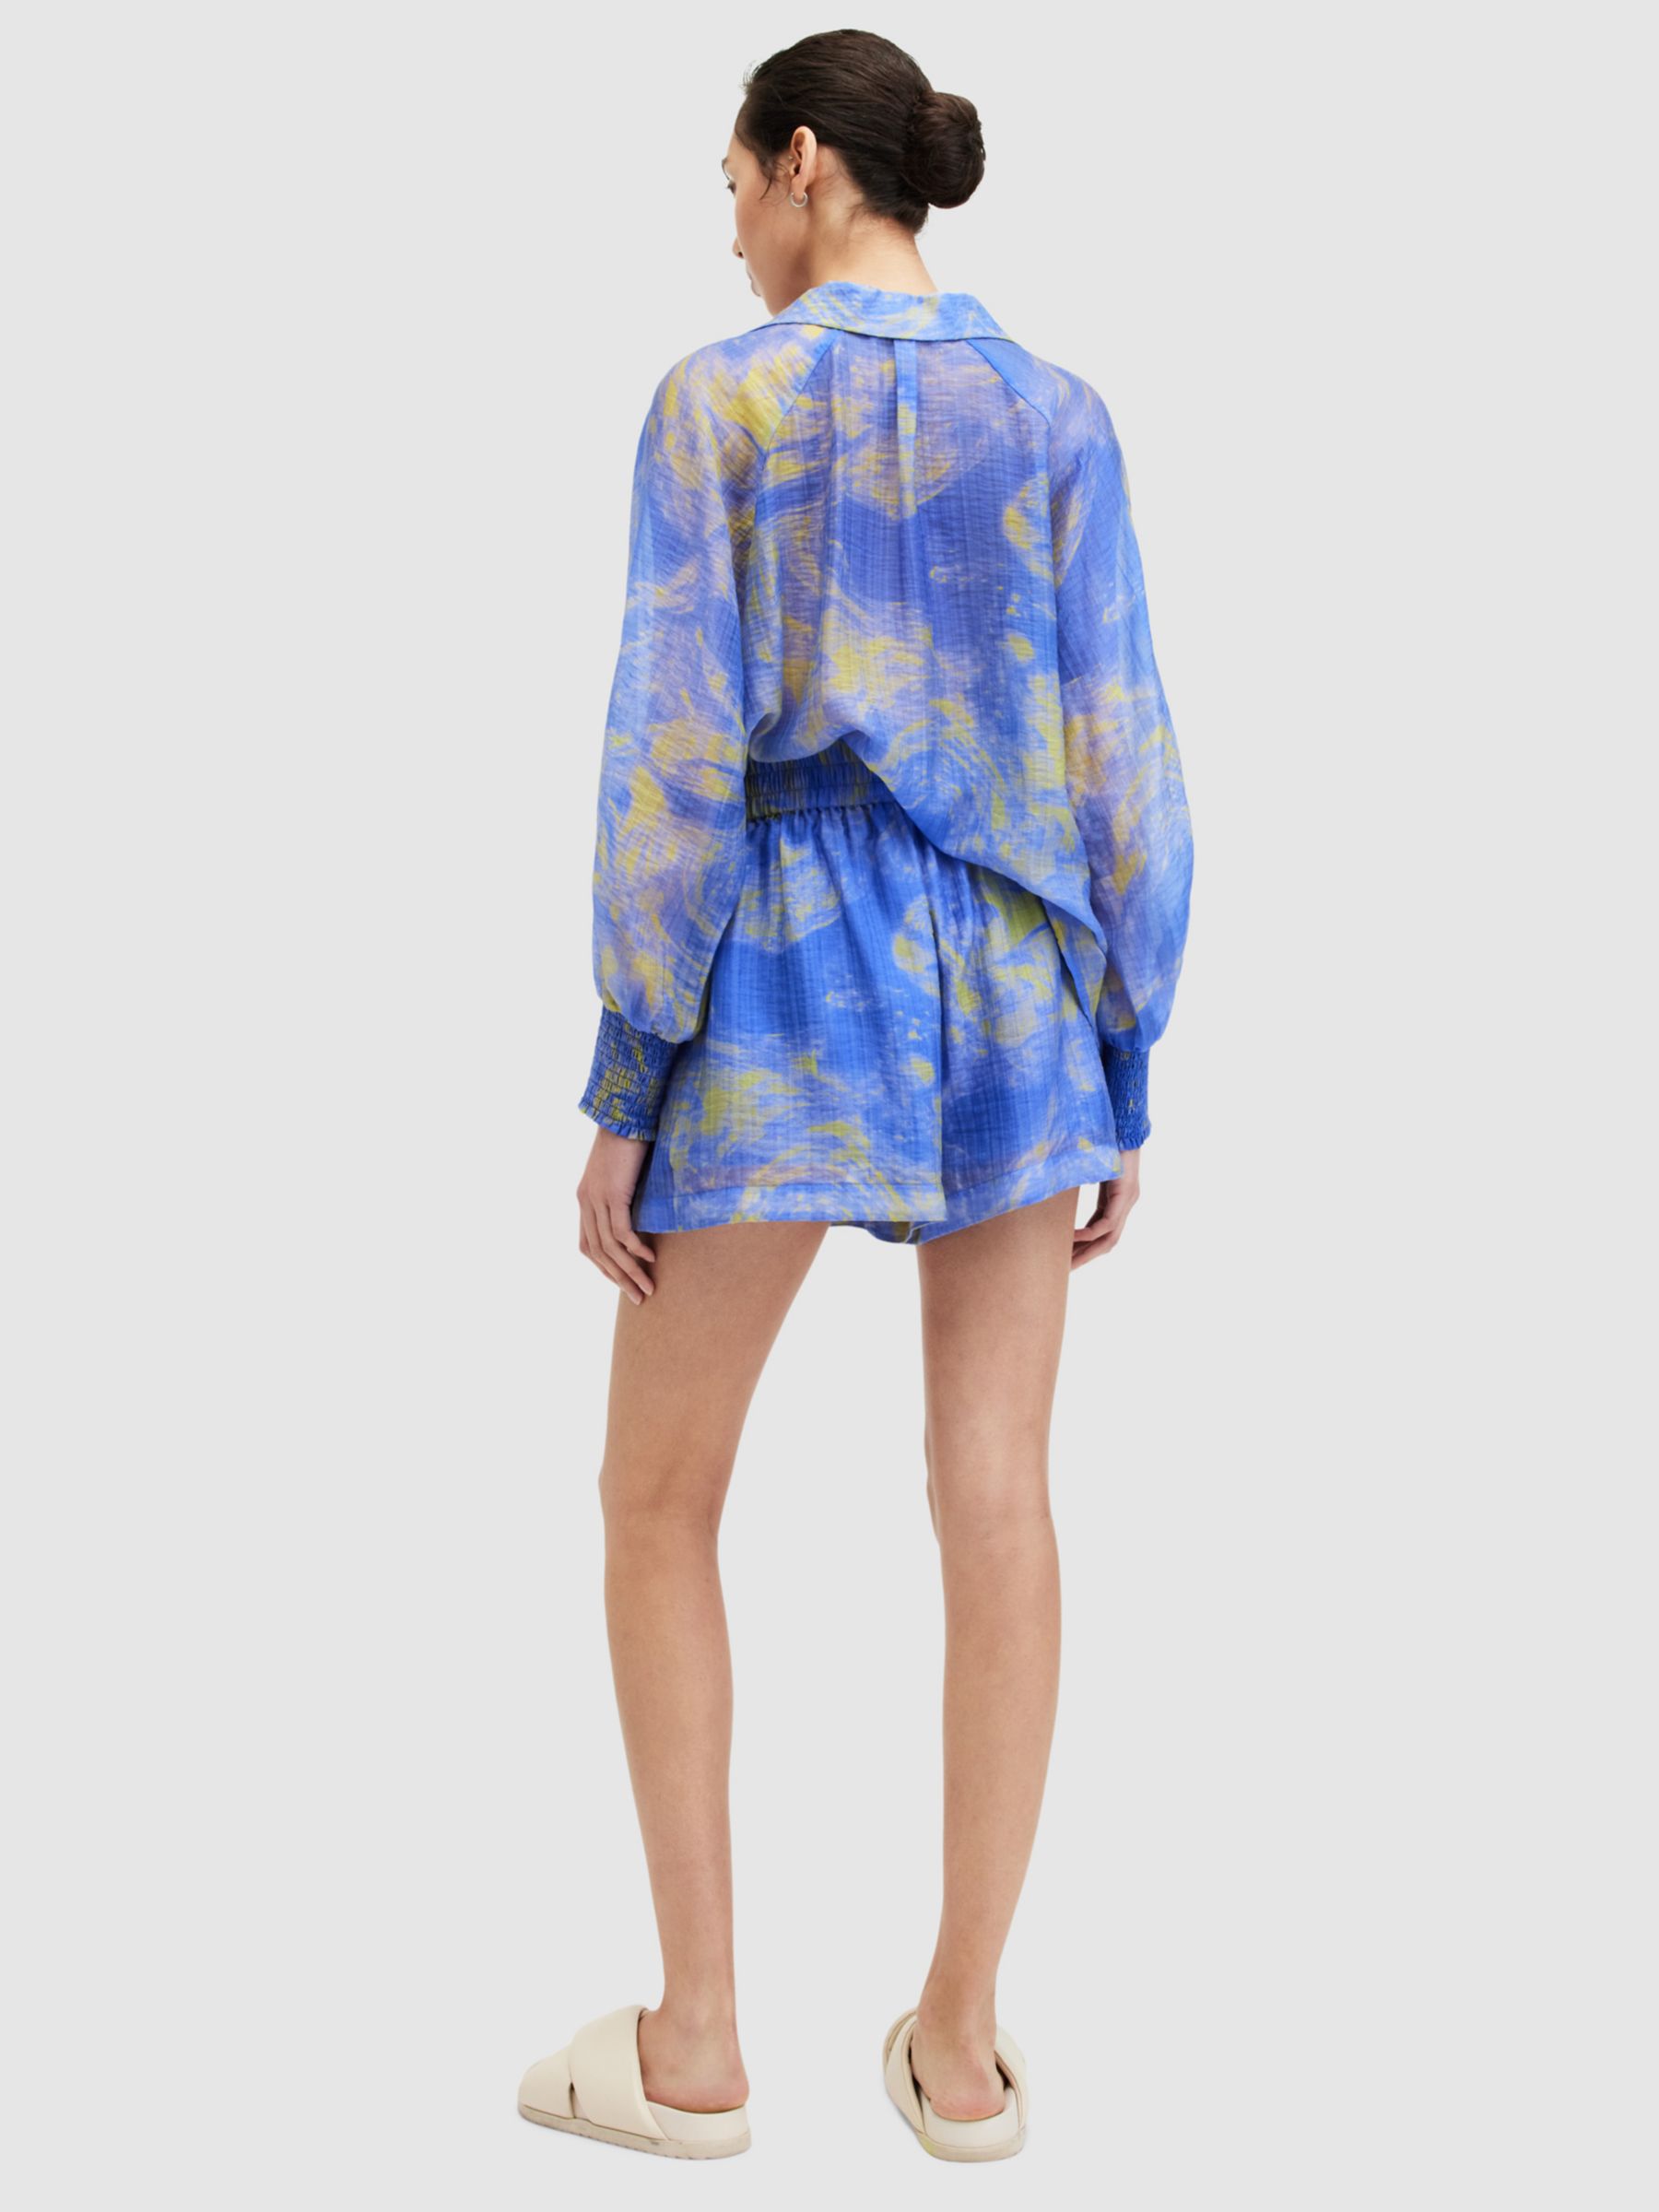 AllSaints Isla Abstract Print Drawstring Shorts, Electric Blue/Multi, 10